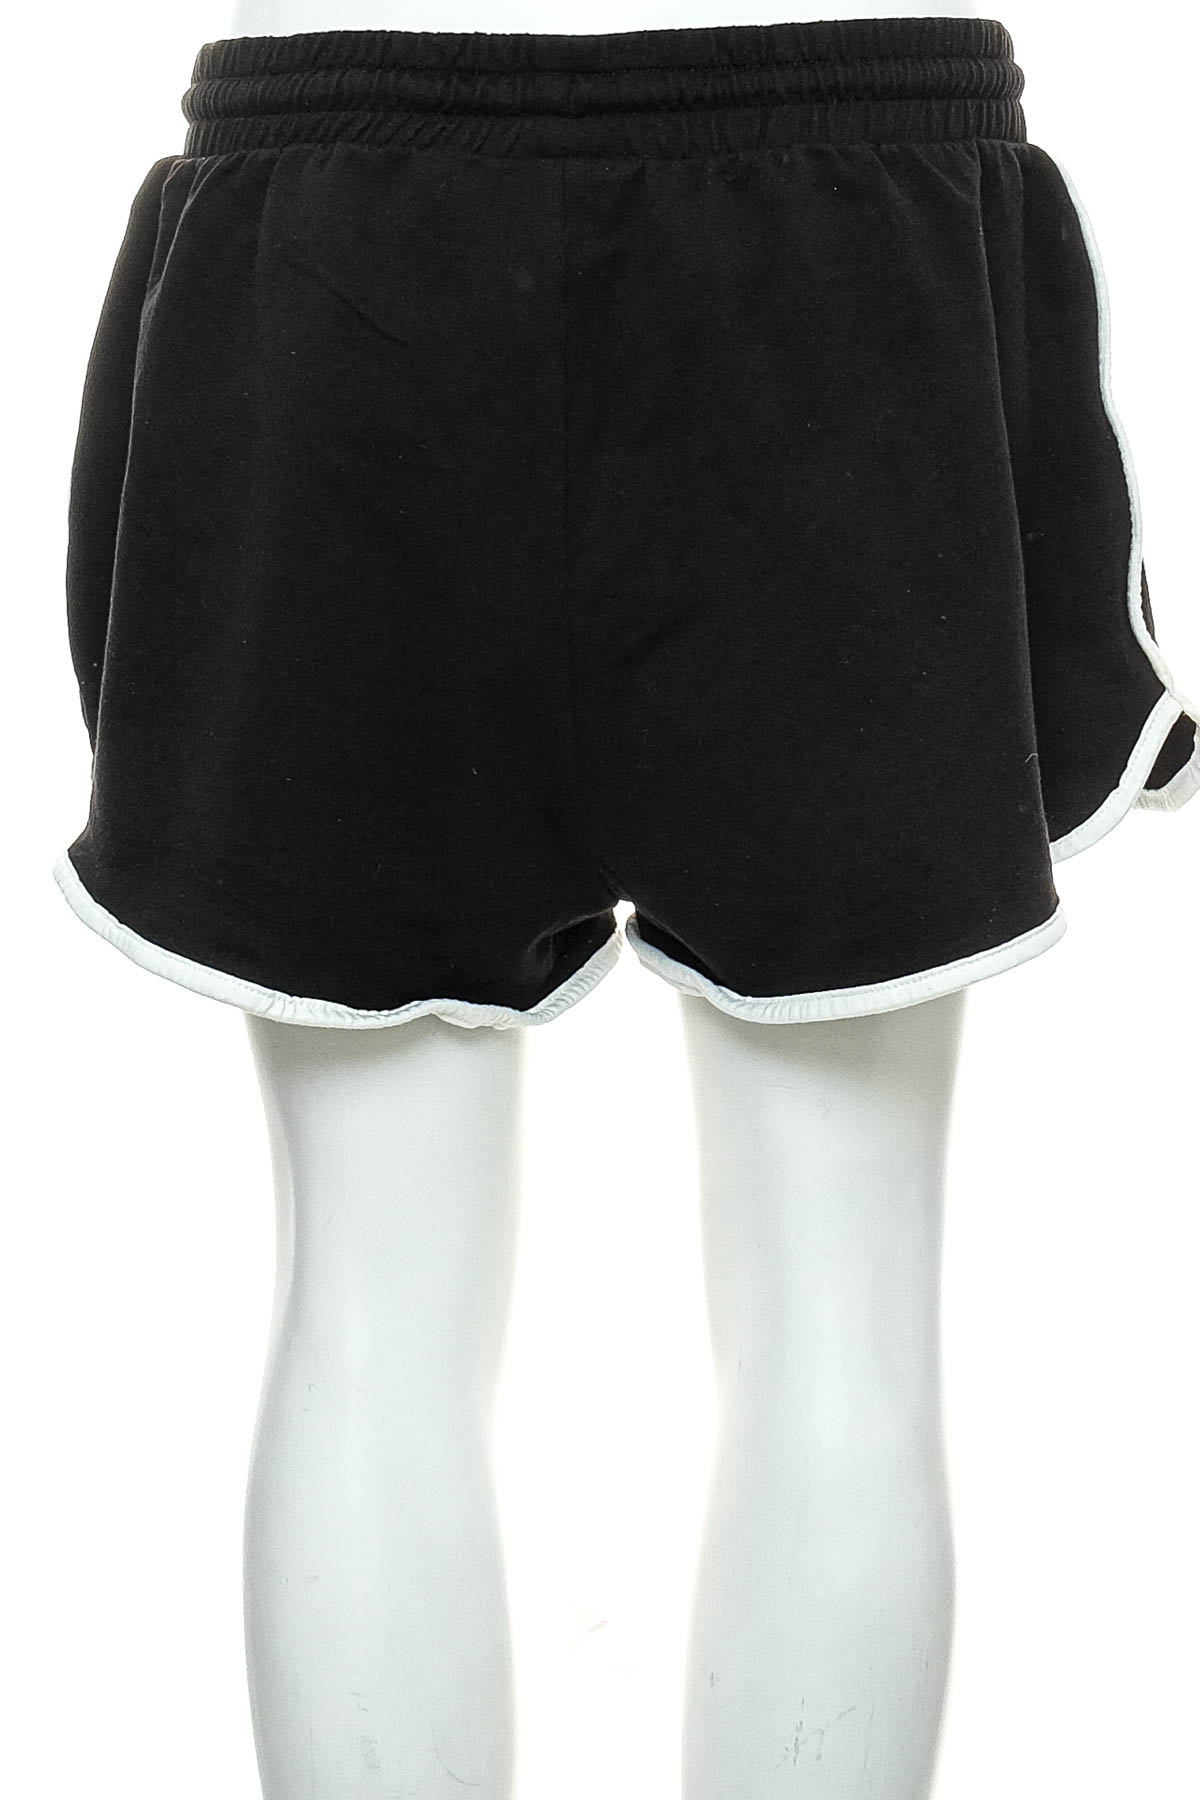 Female shorts - MONKI - 1